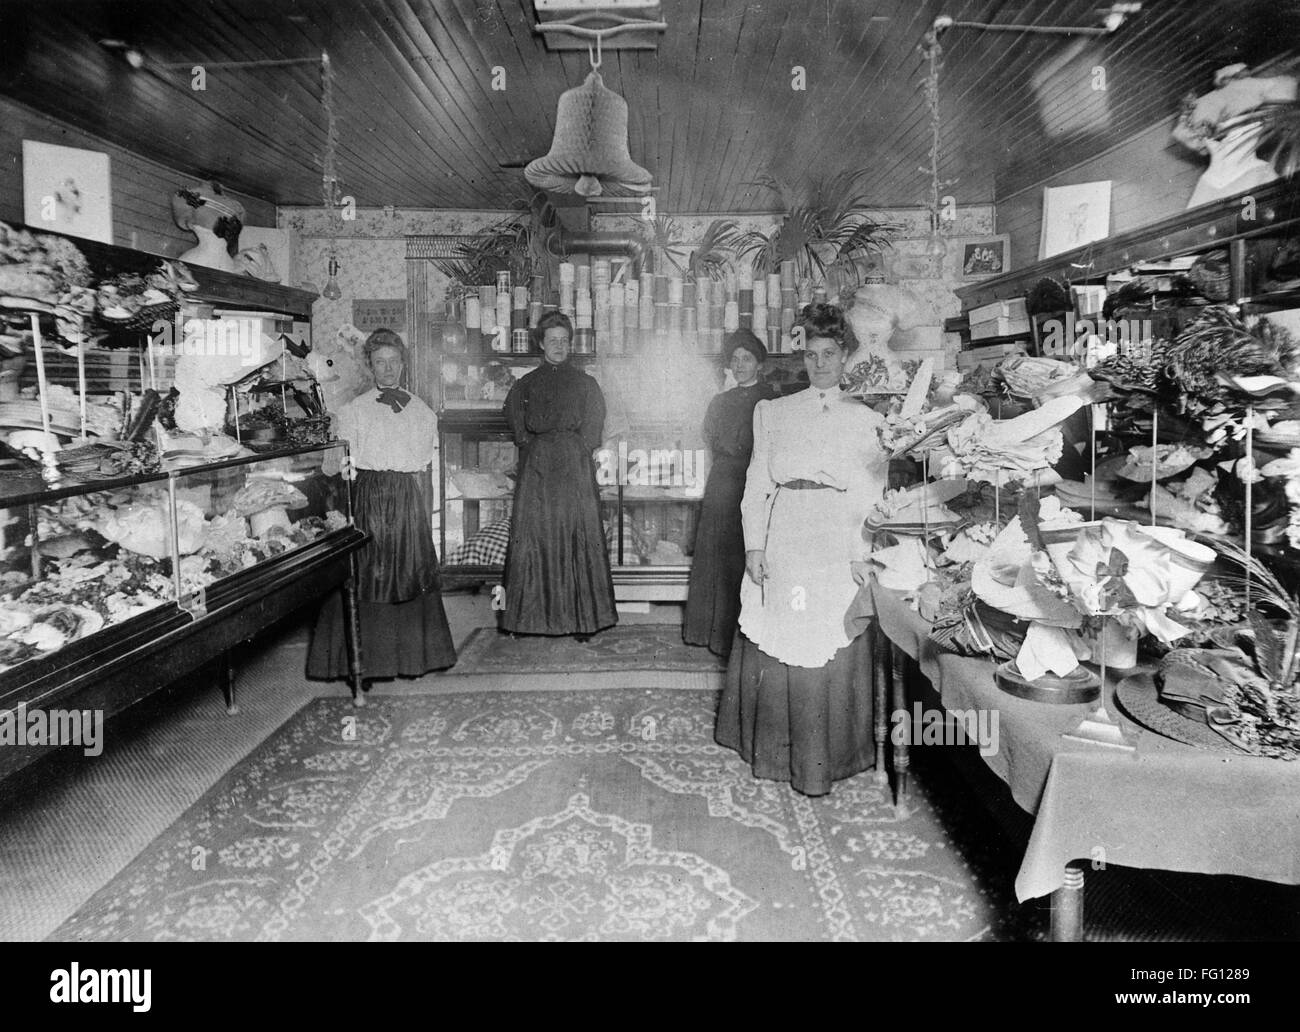 MINNESOTA: ST. Pietro, c1890. /NLadies in un negozio millinery in San Pietro, Minnesota. Fotografia, c1890. Foto Stock